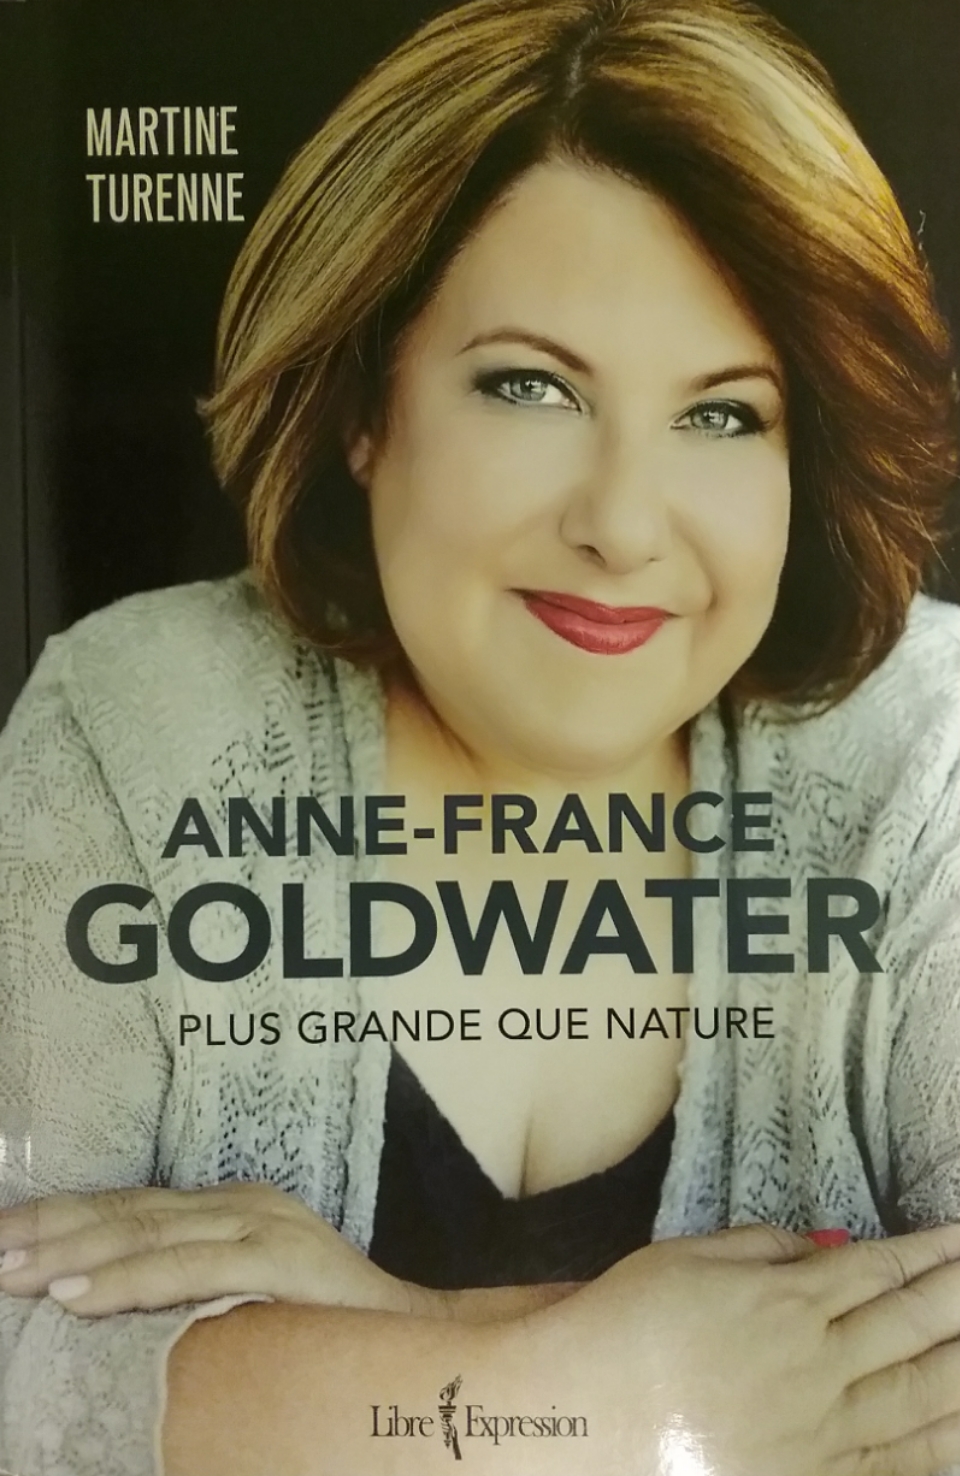 Anne-France Goldwater plus grande que nature Martine Turenne